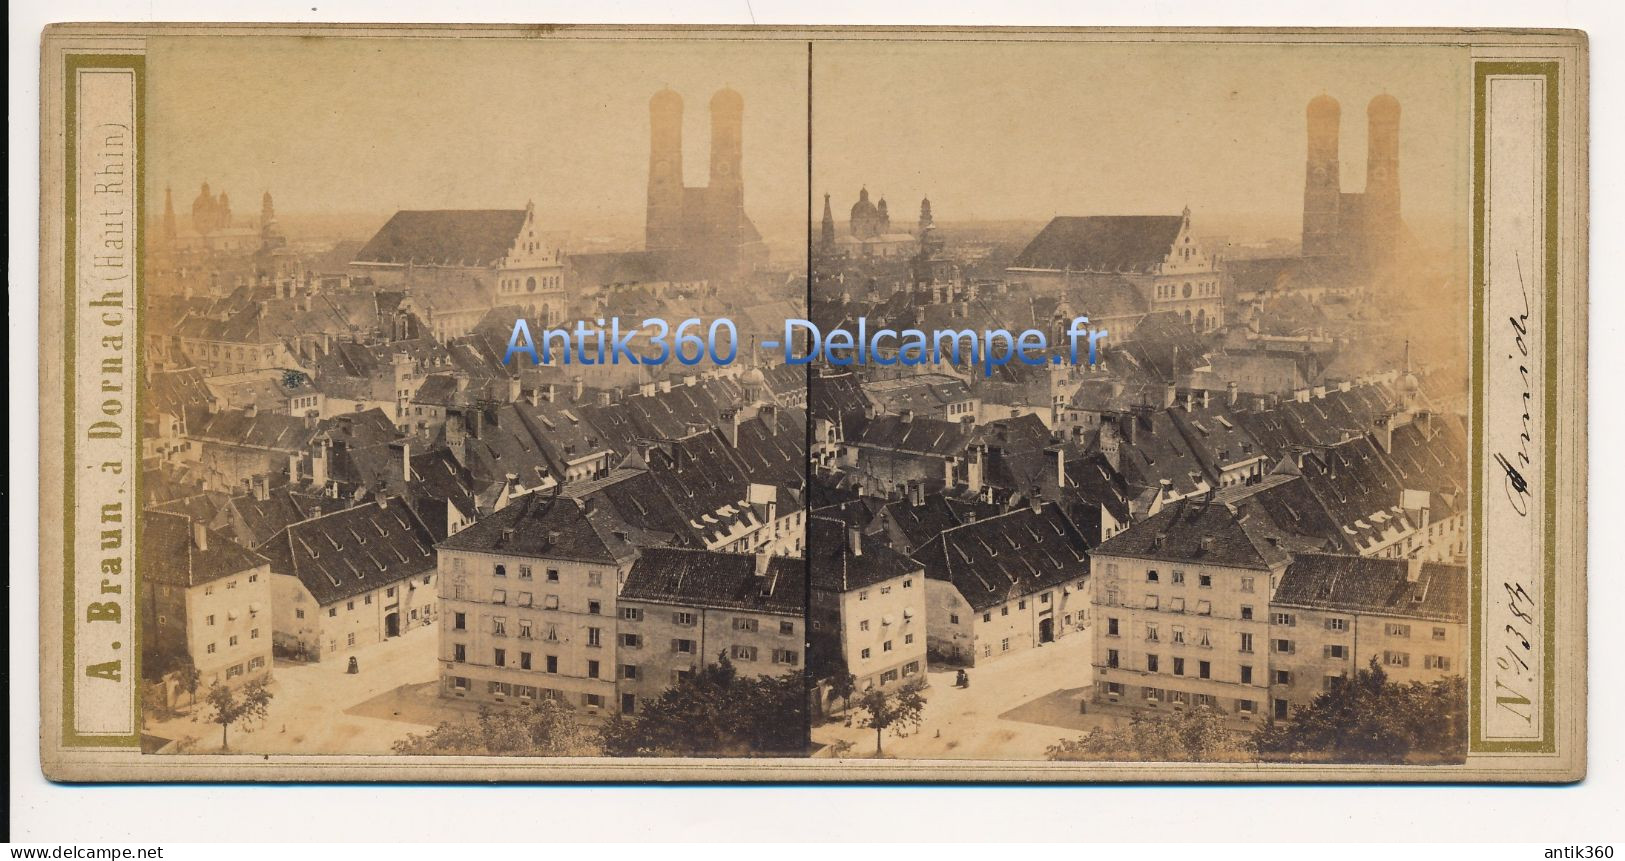 Photographie Ancienne Vue Stéréoscopique Circa 1860 Allemagne Vue De Munich Photographe Adolphe BRAUN - Stereoscopic